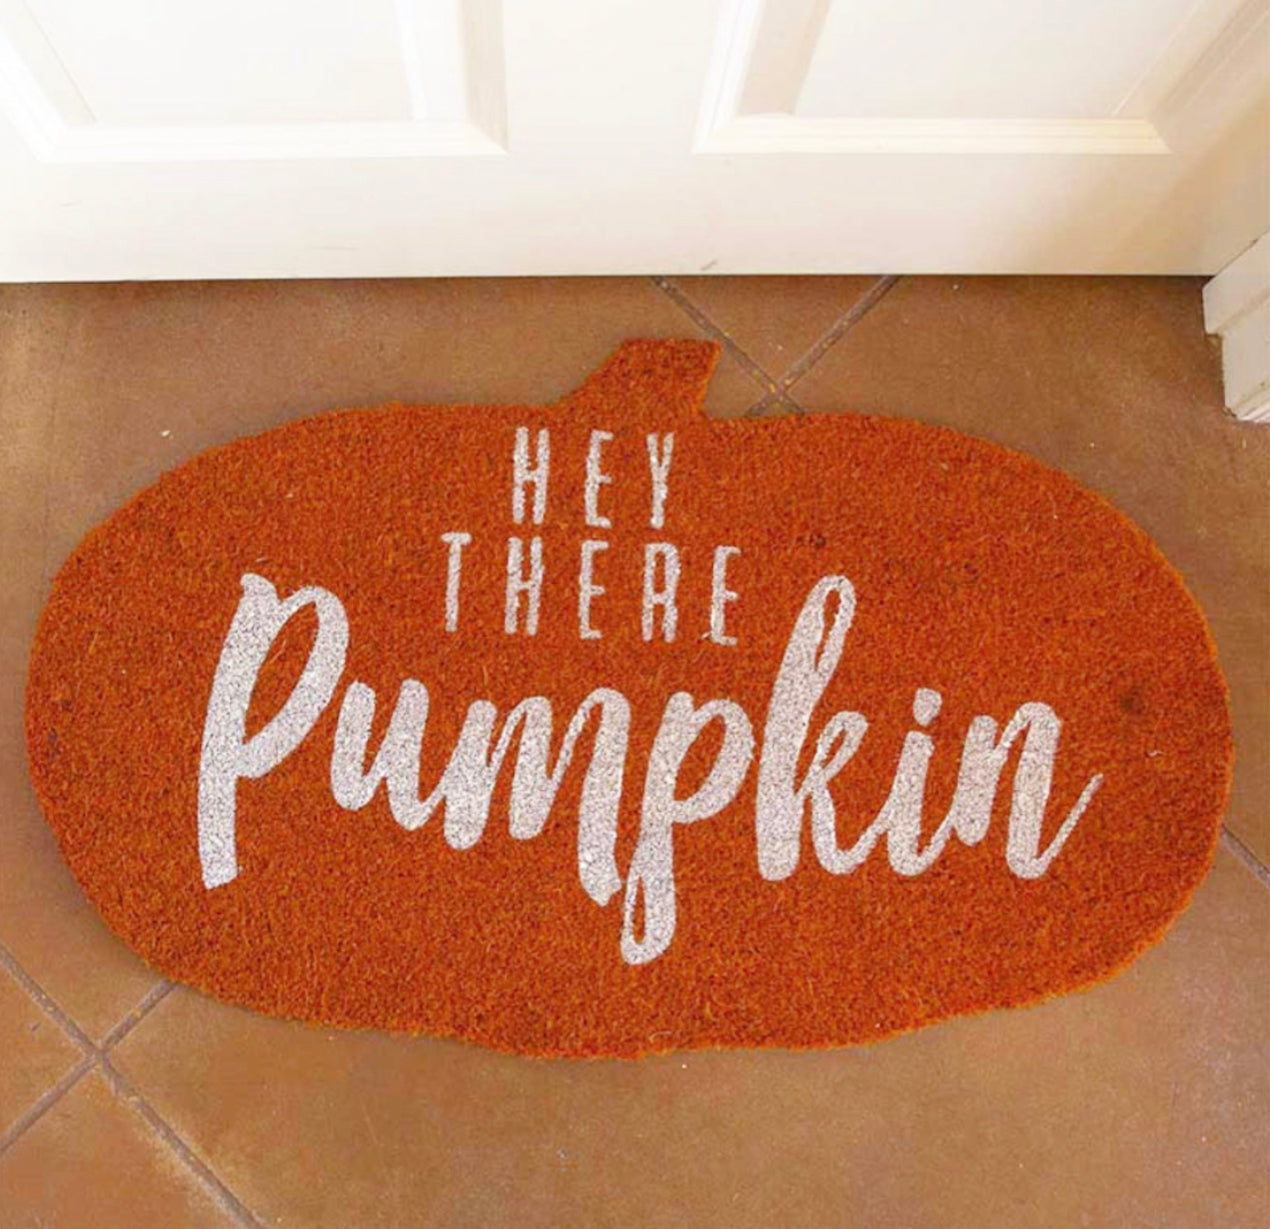 The Royal Standard Coir Doormat - Hey There Pumpkin